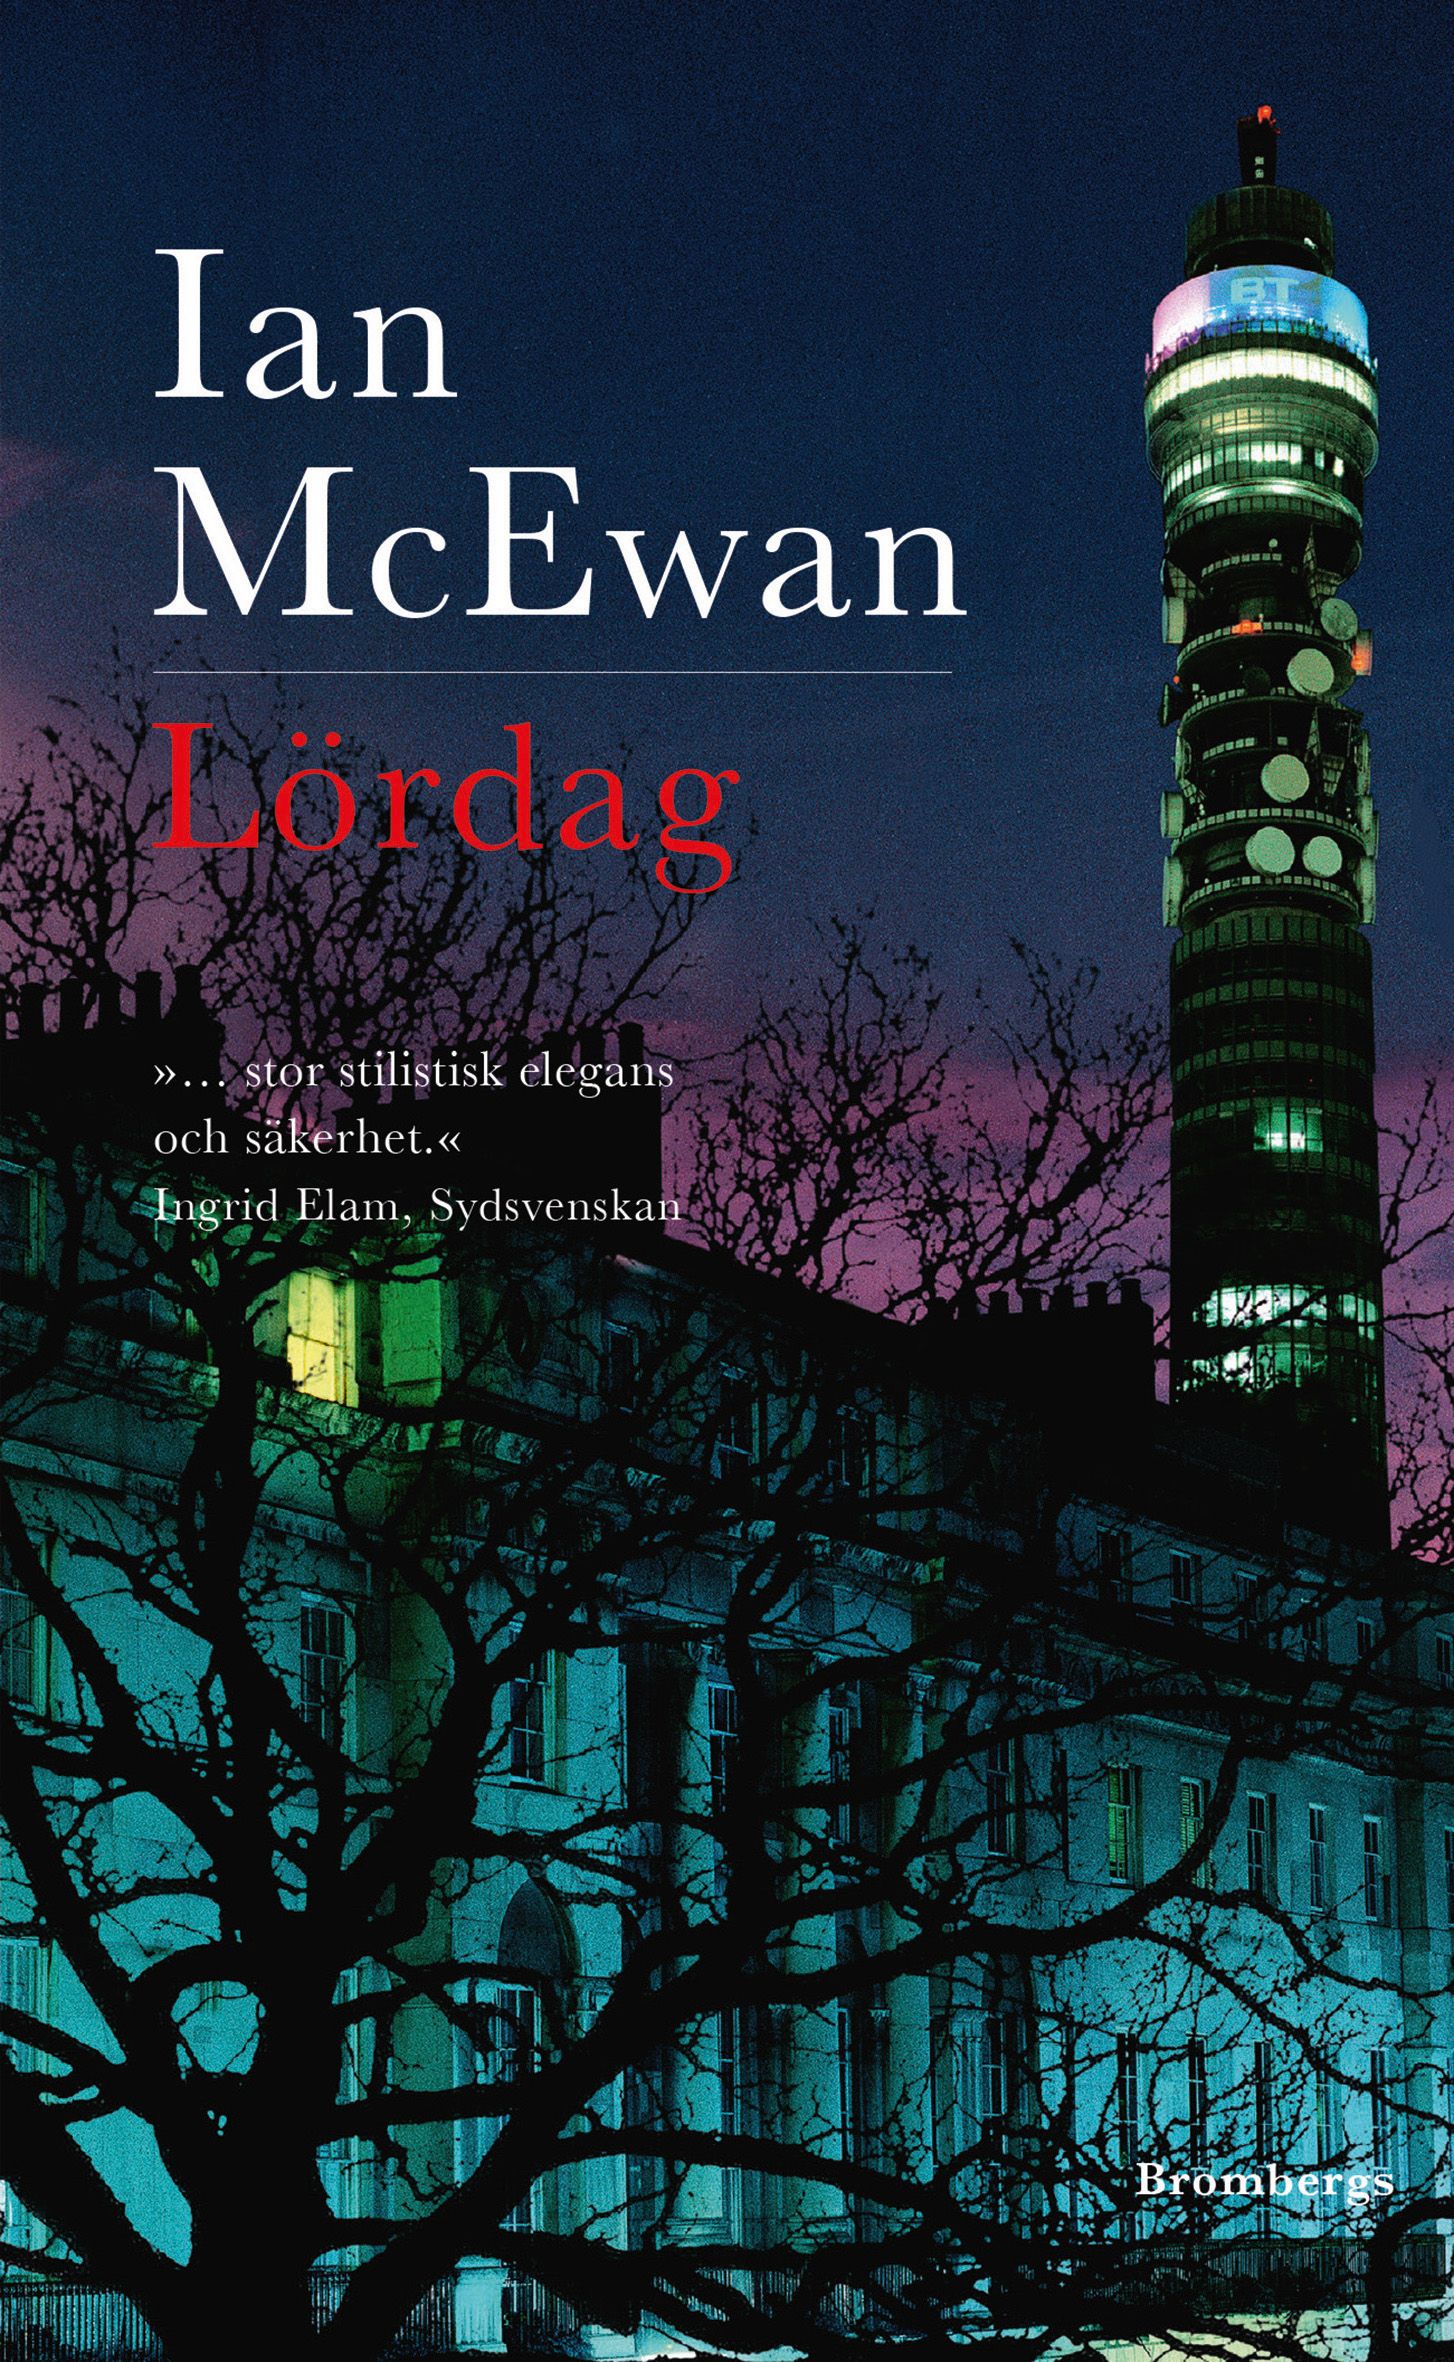 Lördag, e-bok av Ian McEwan